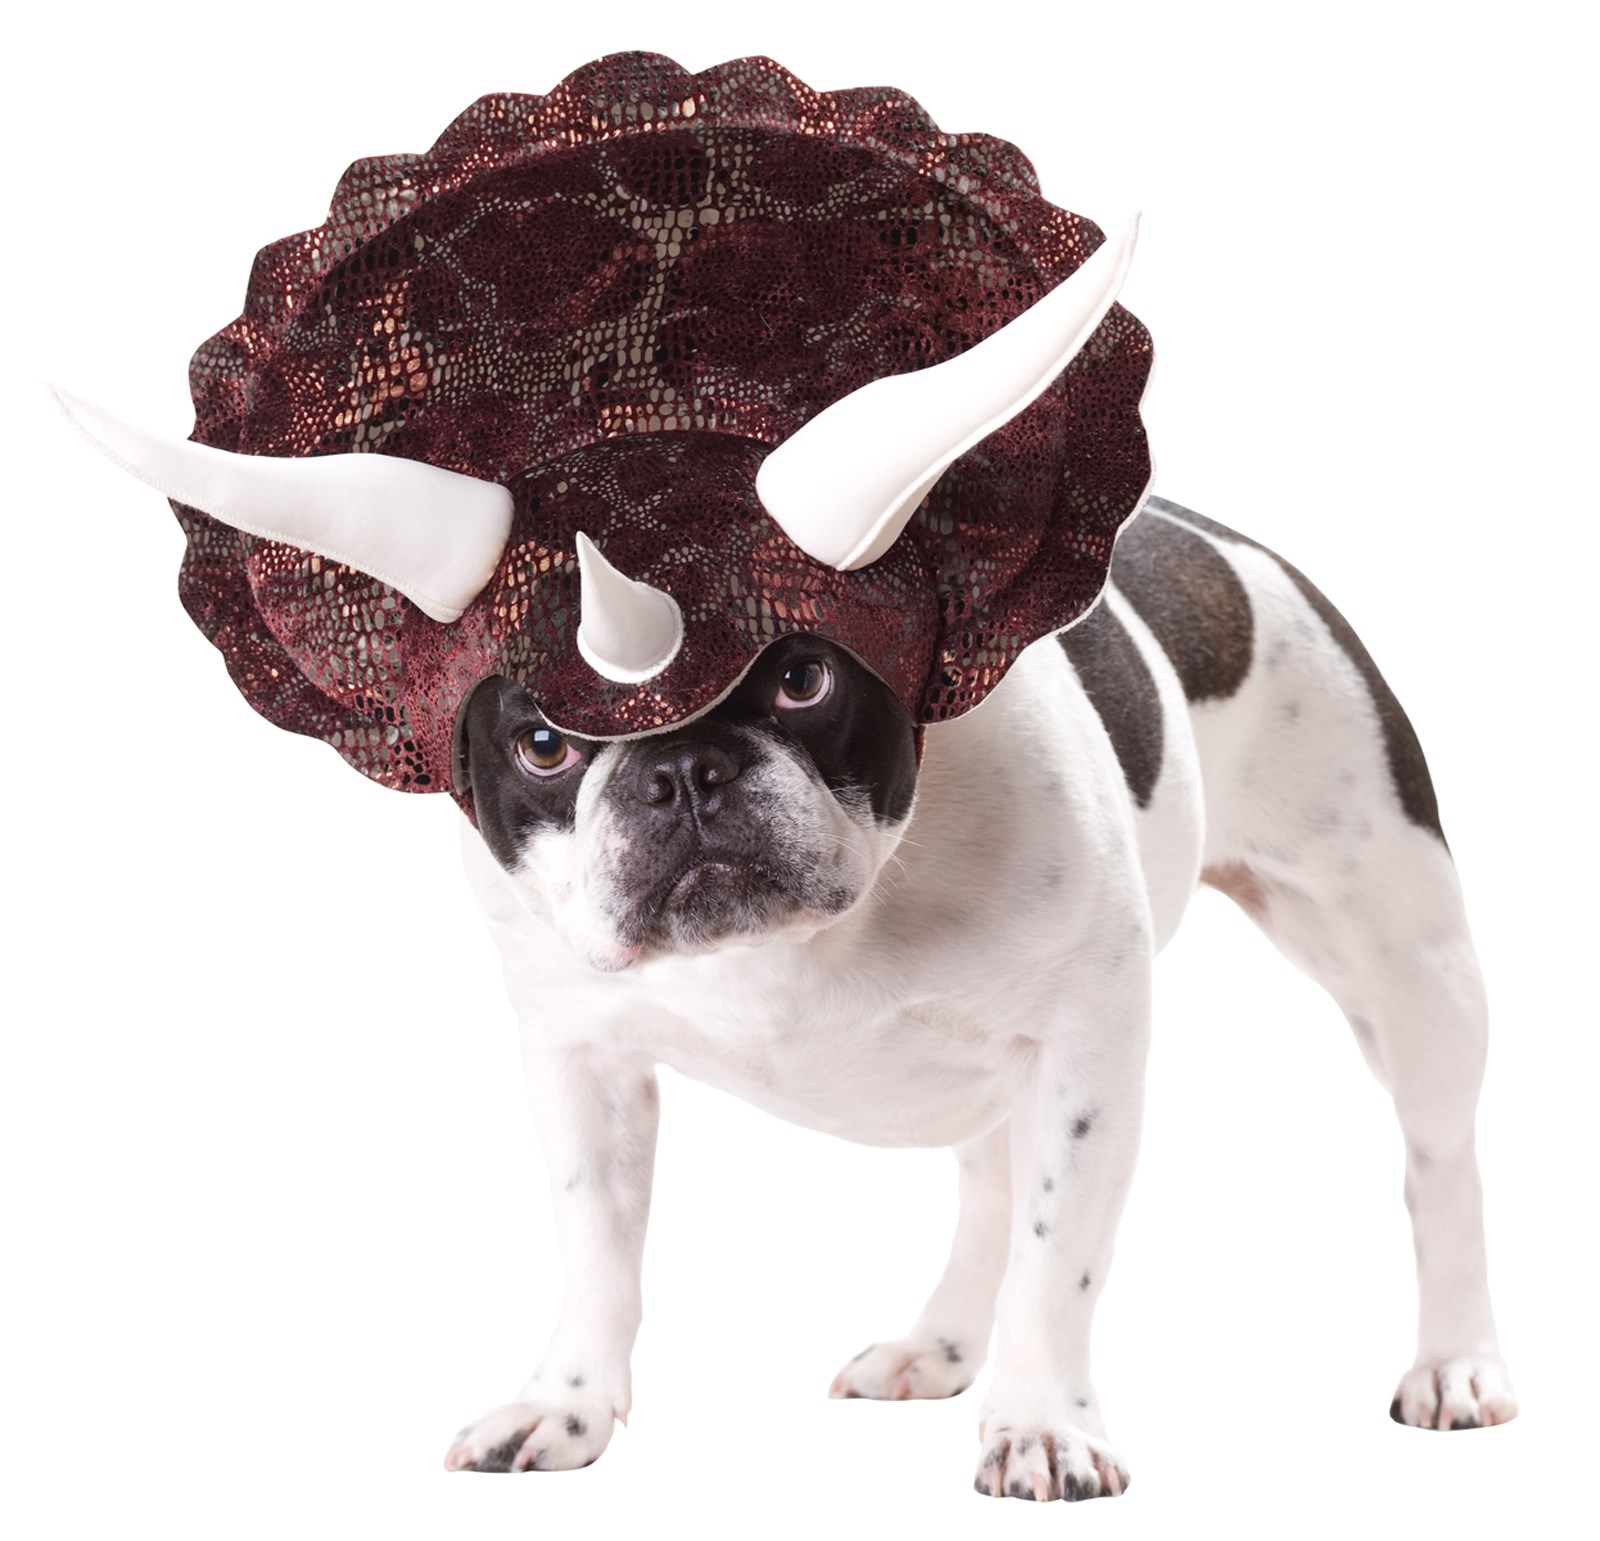 triceratops-dog-costume-bc-806292.jpg?zm=800,800,1,0,0